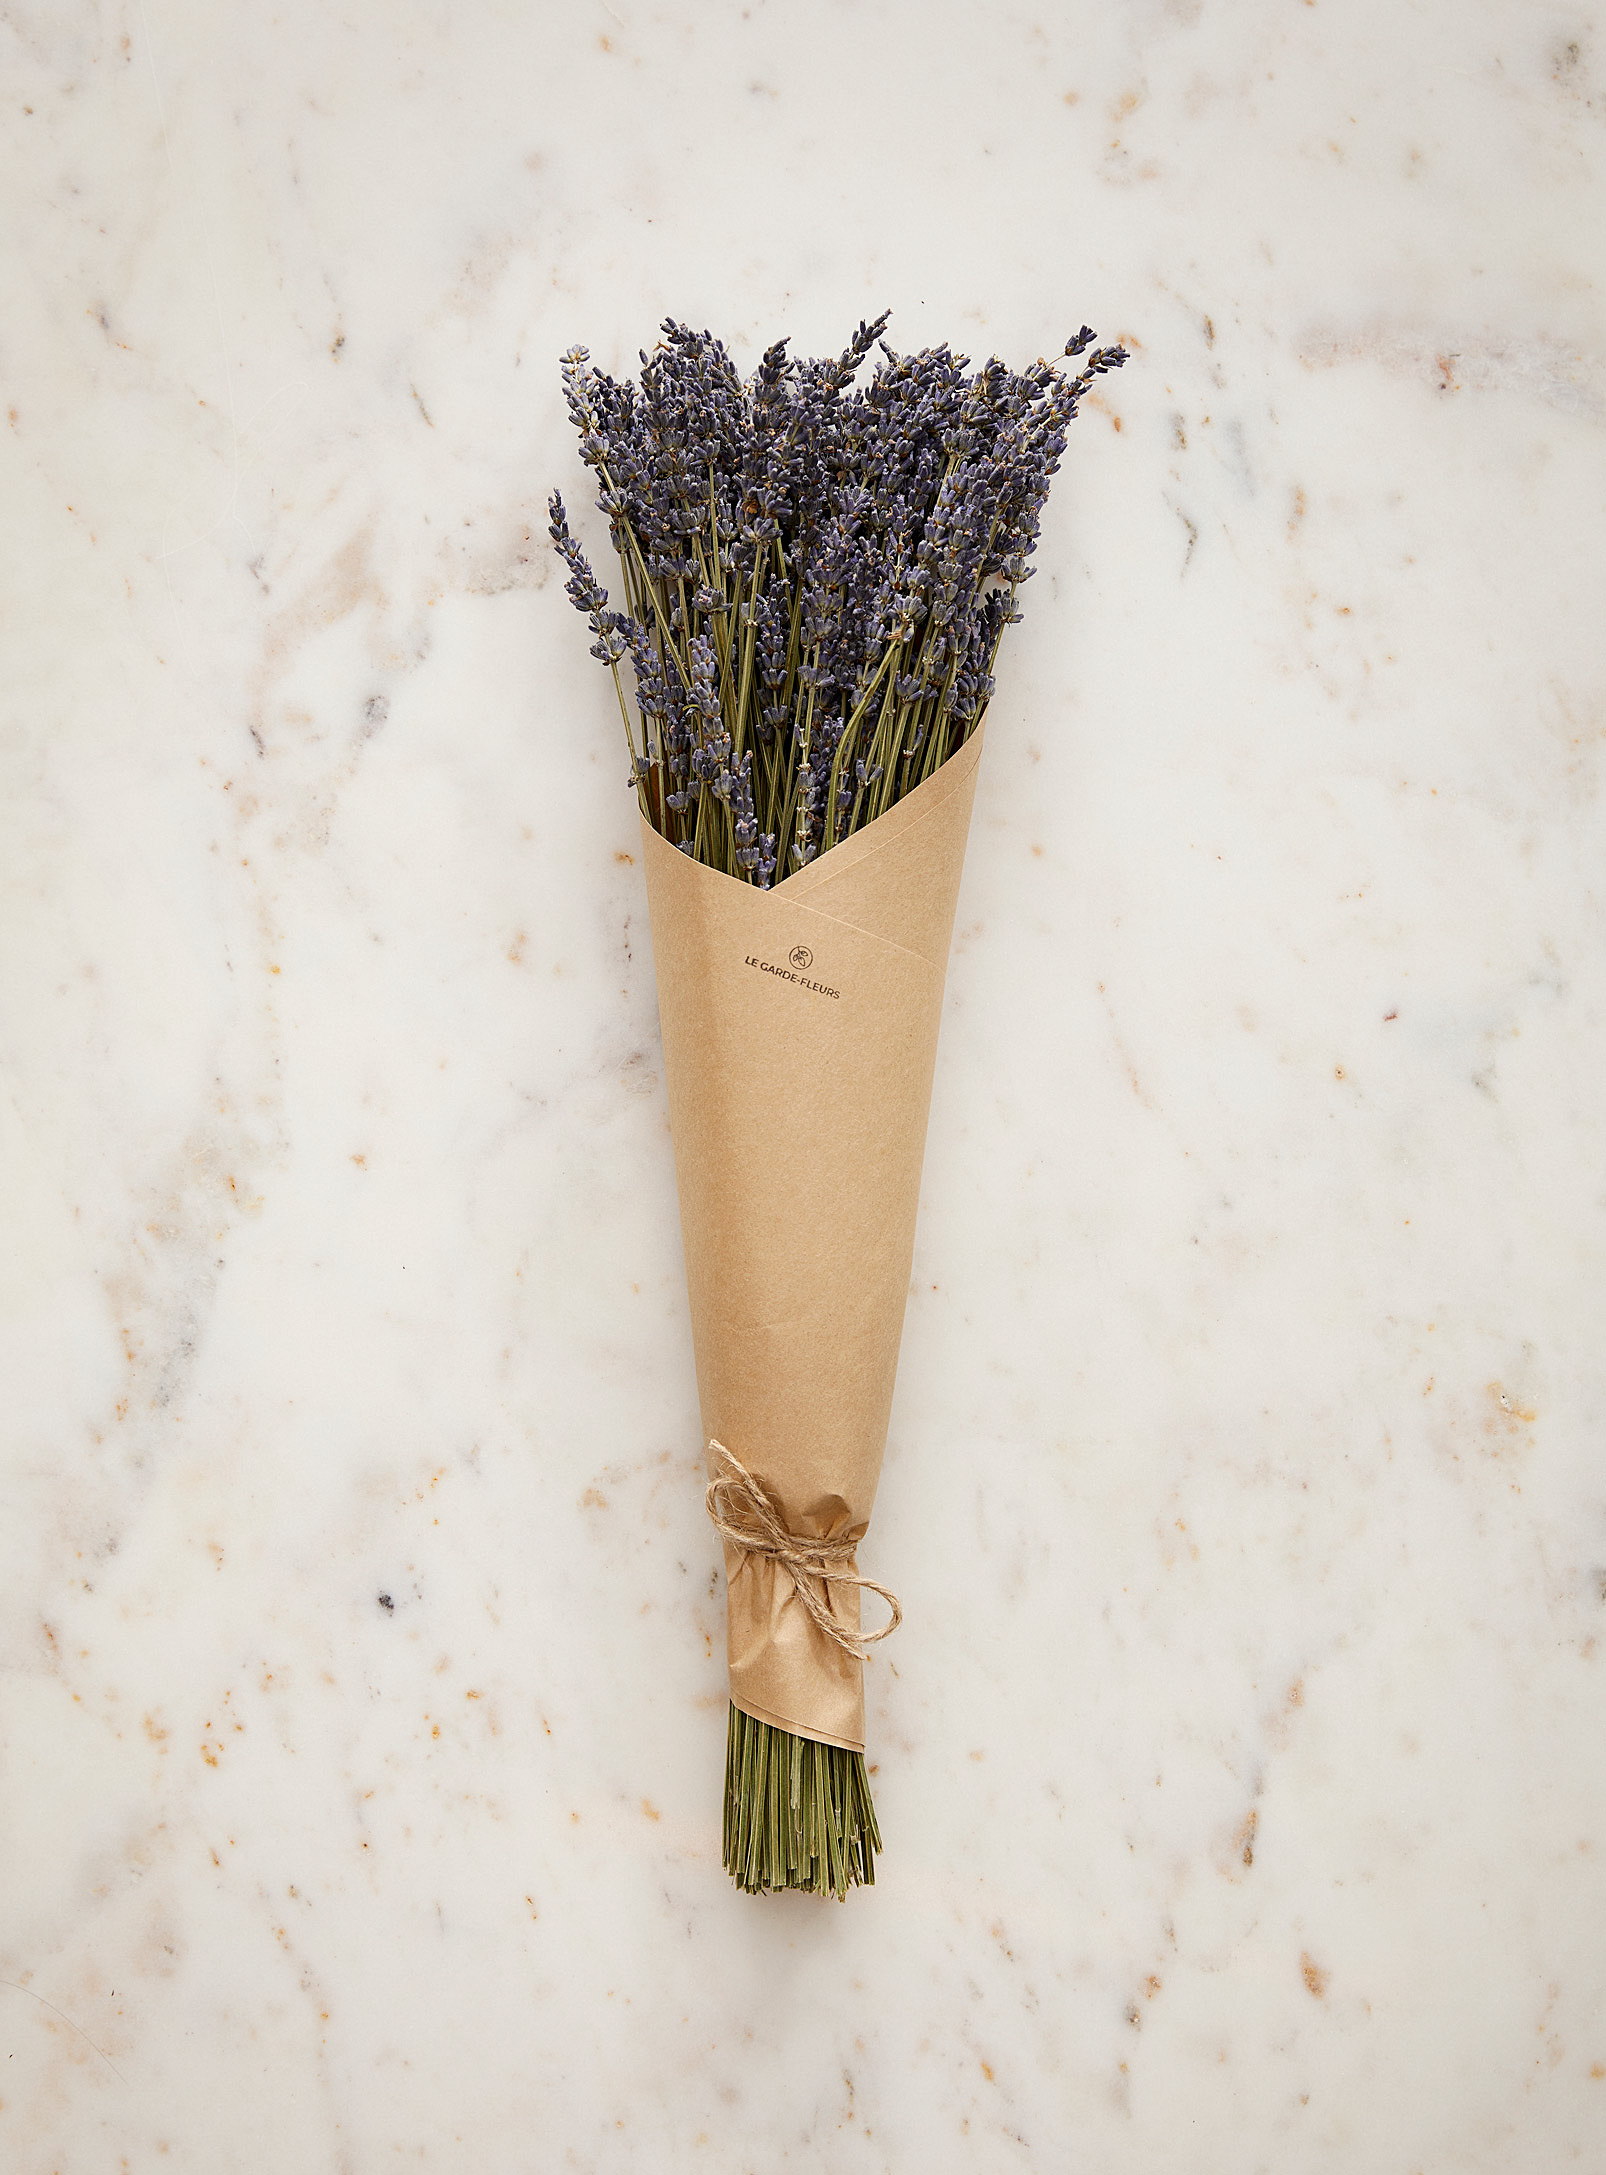 Le garde-fleurs - Dried lavender wreath